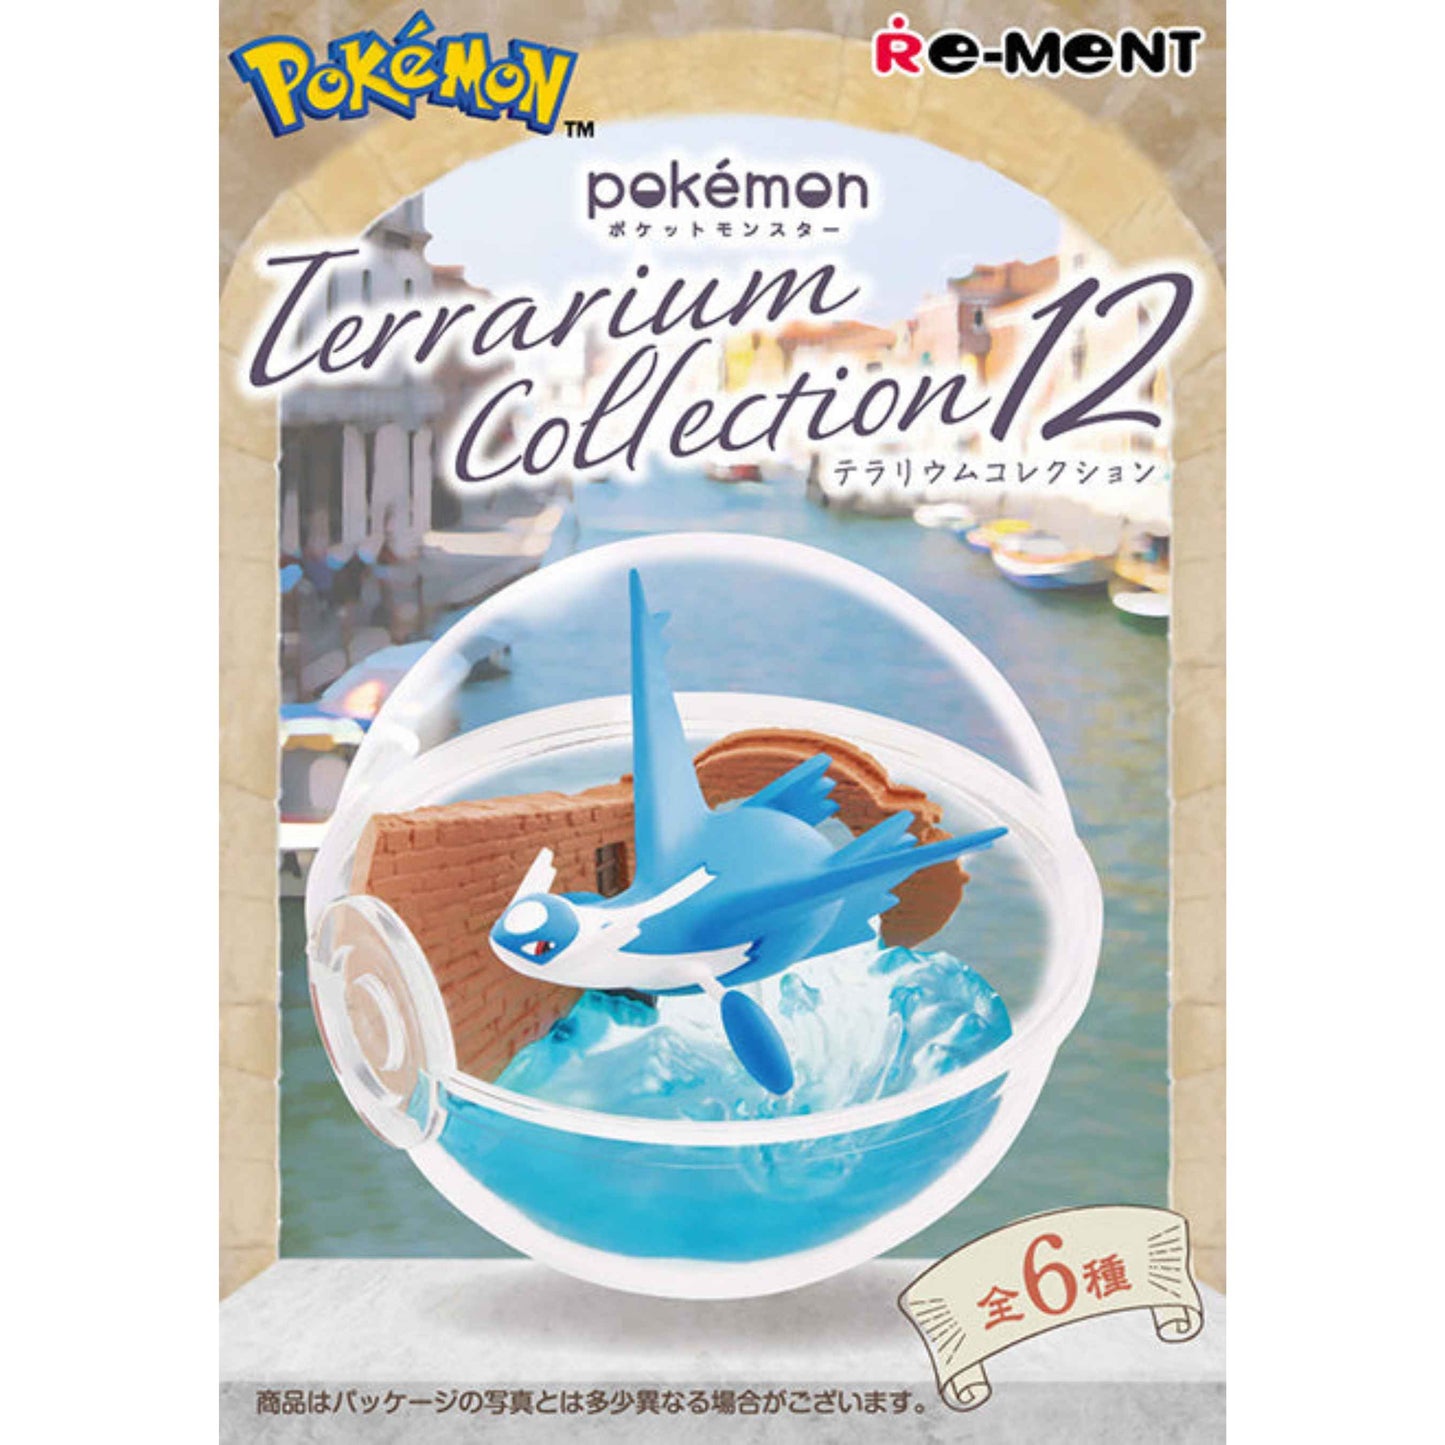 【New】re-Ment: Pokémon Terrarium Collection 12 Series Blind Box Random Style